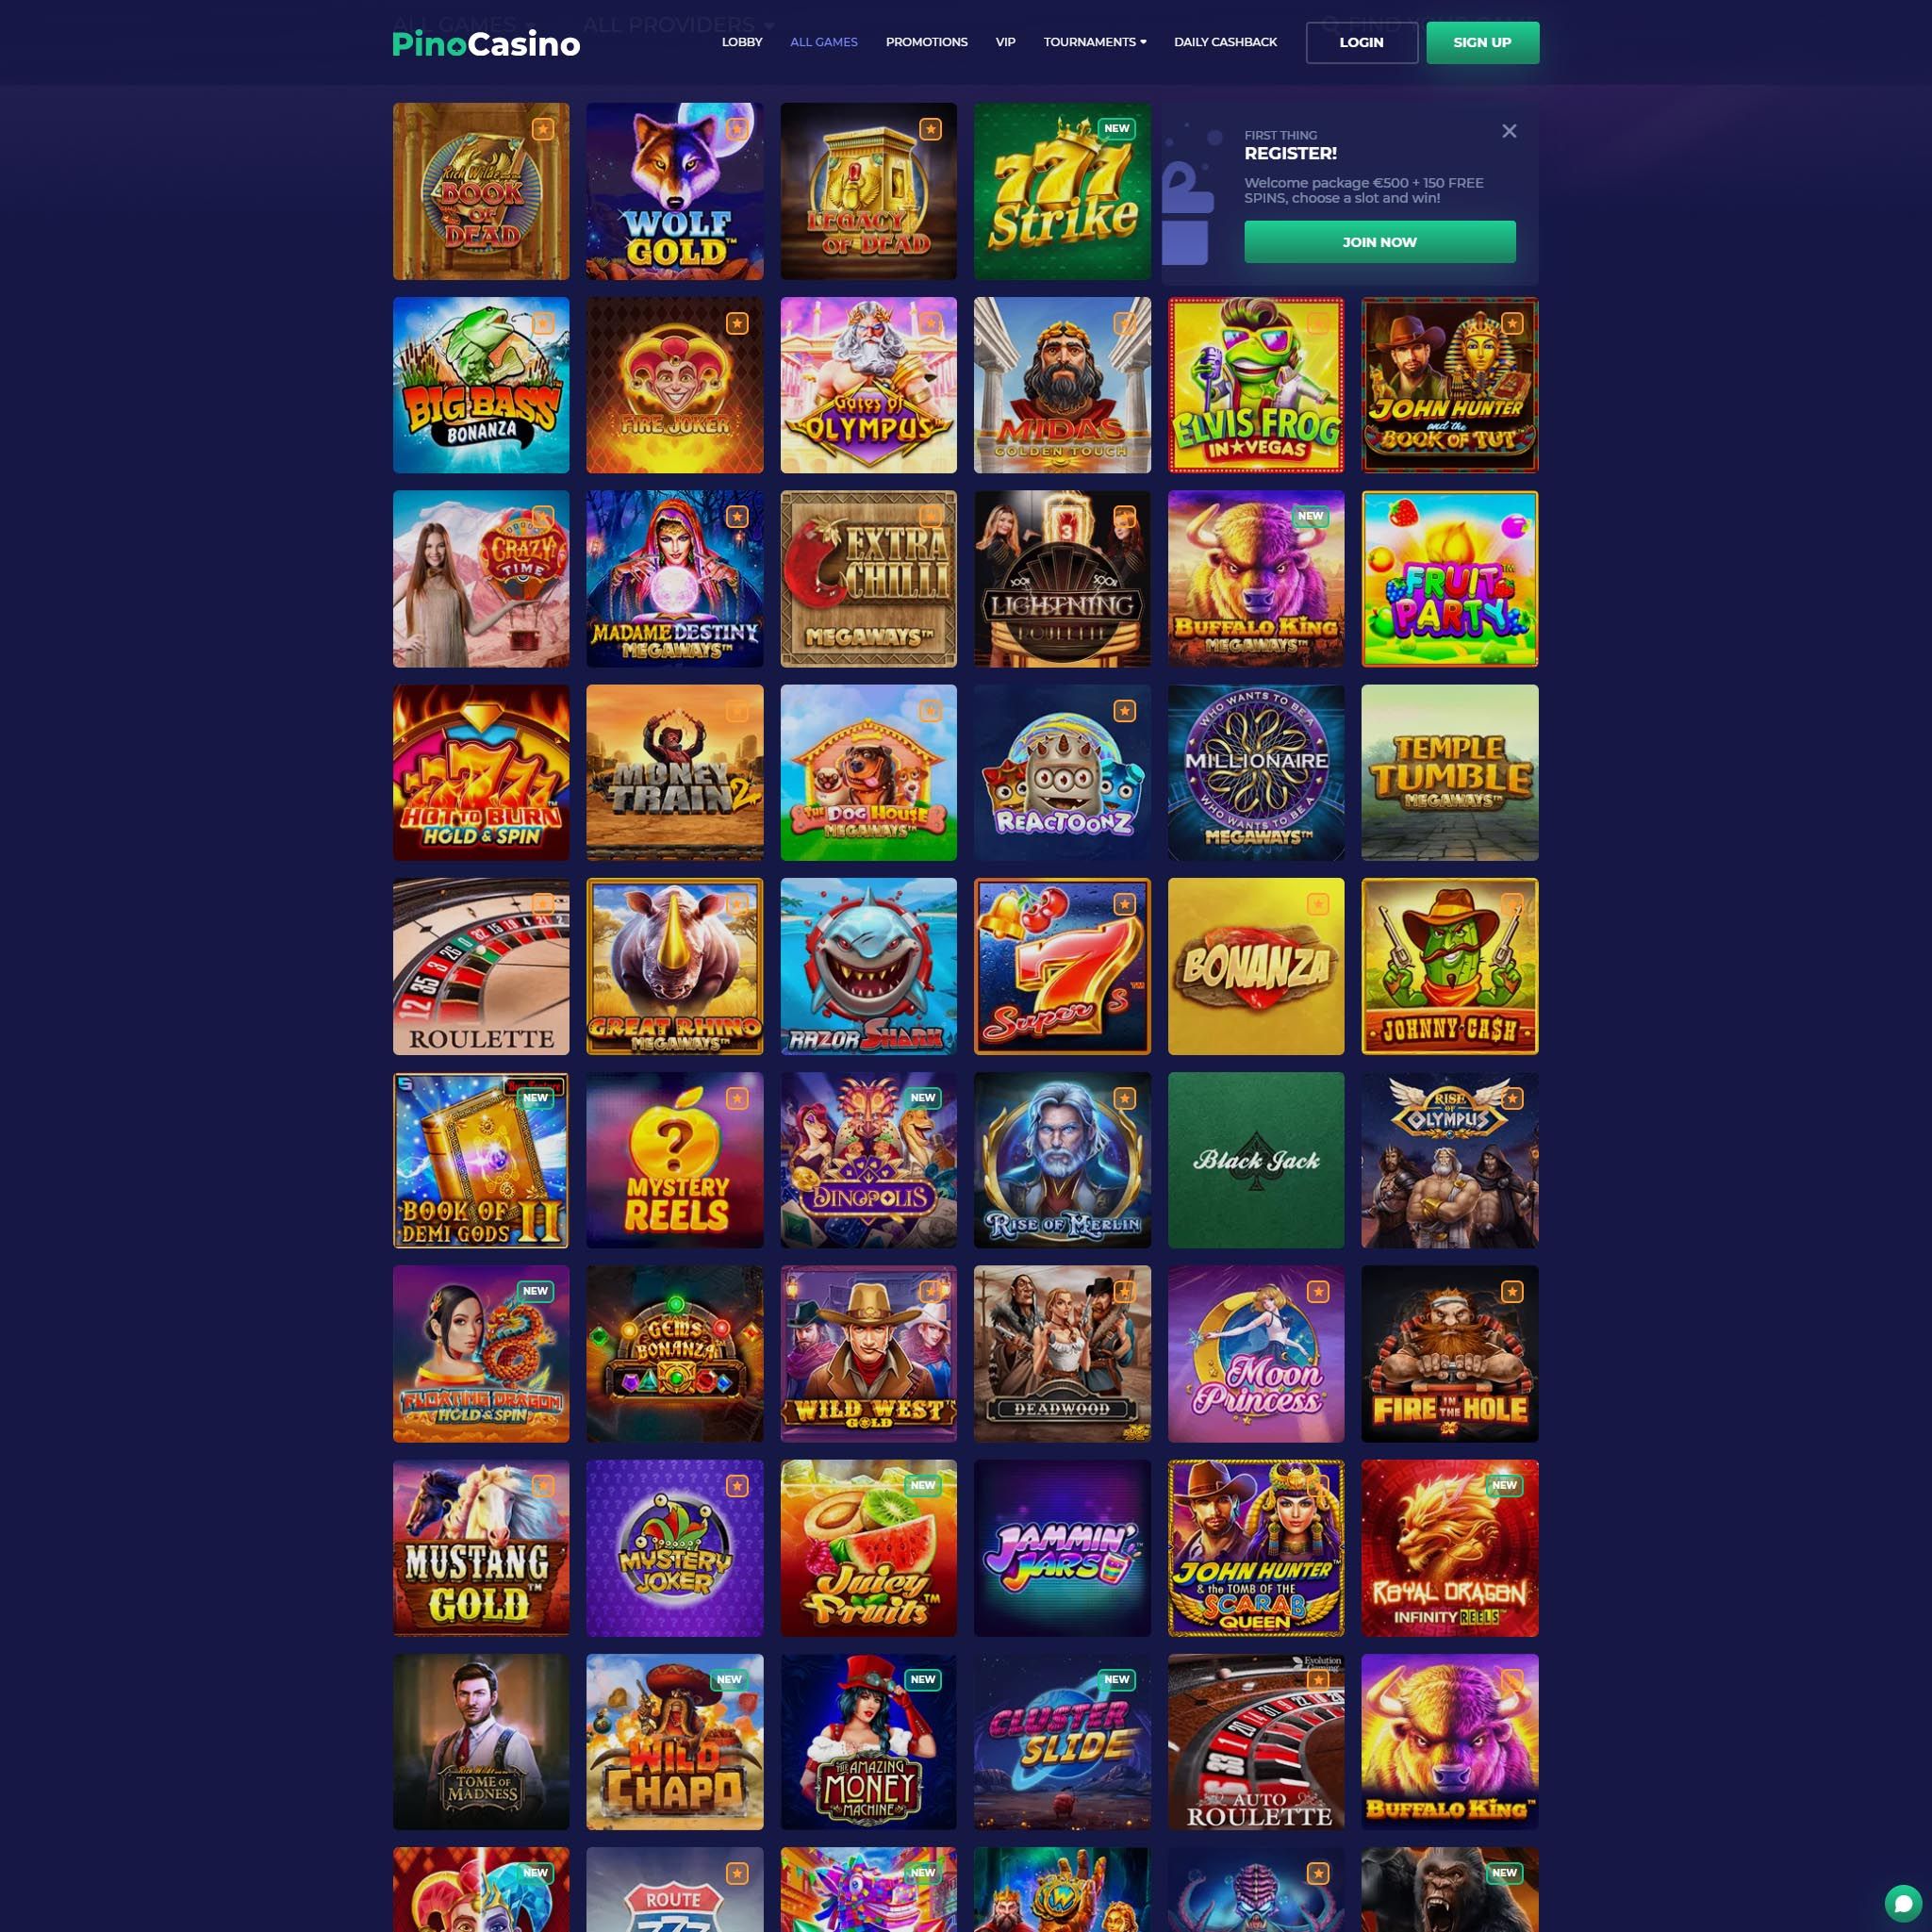 Pino Casino full games catalogue